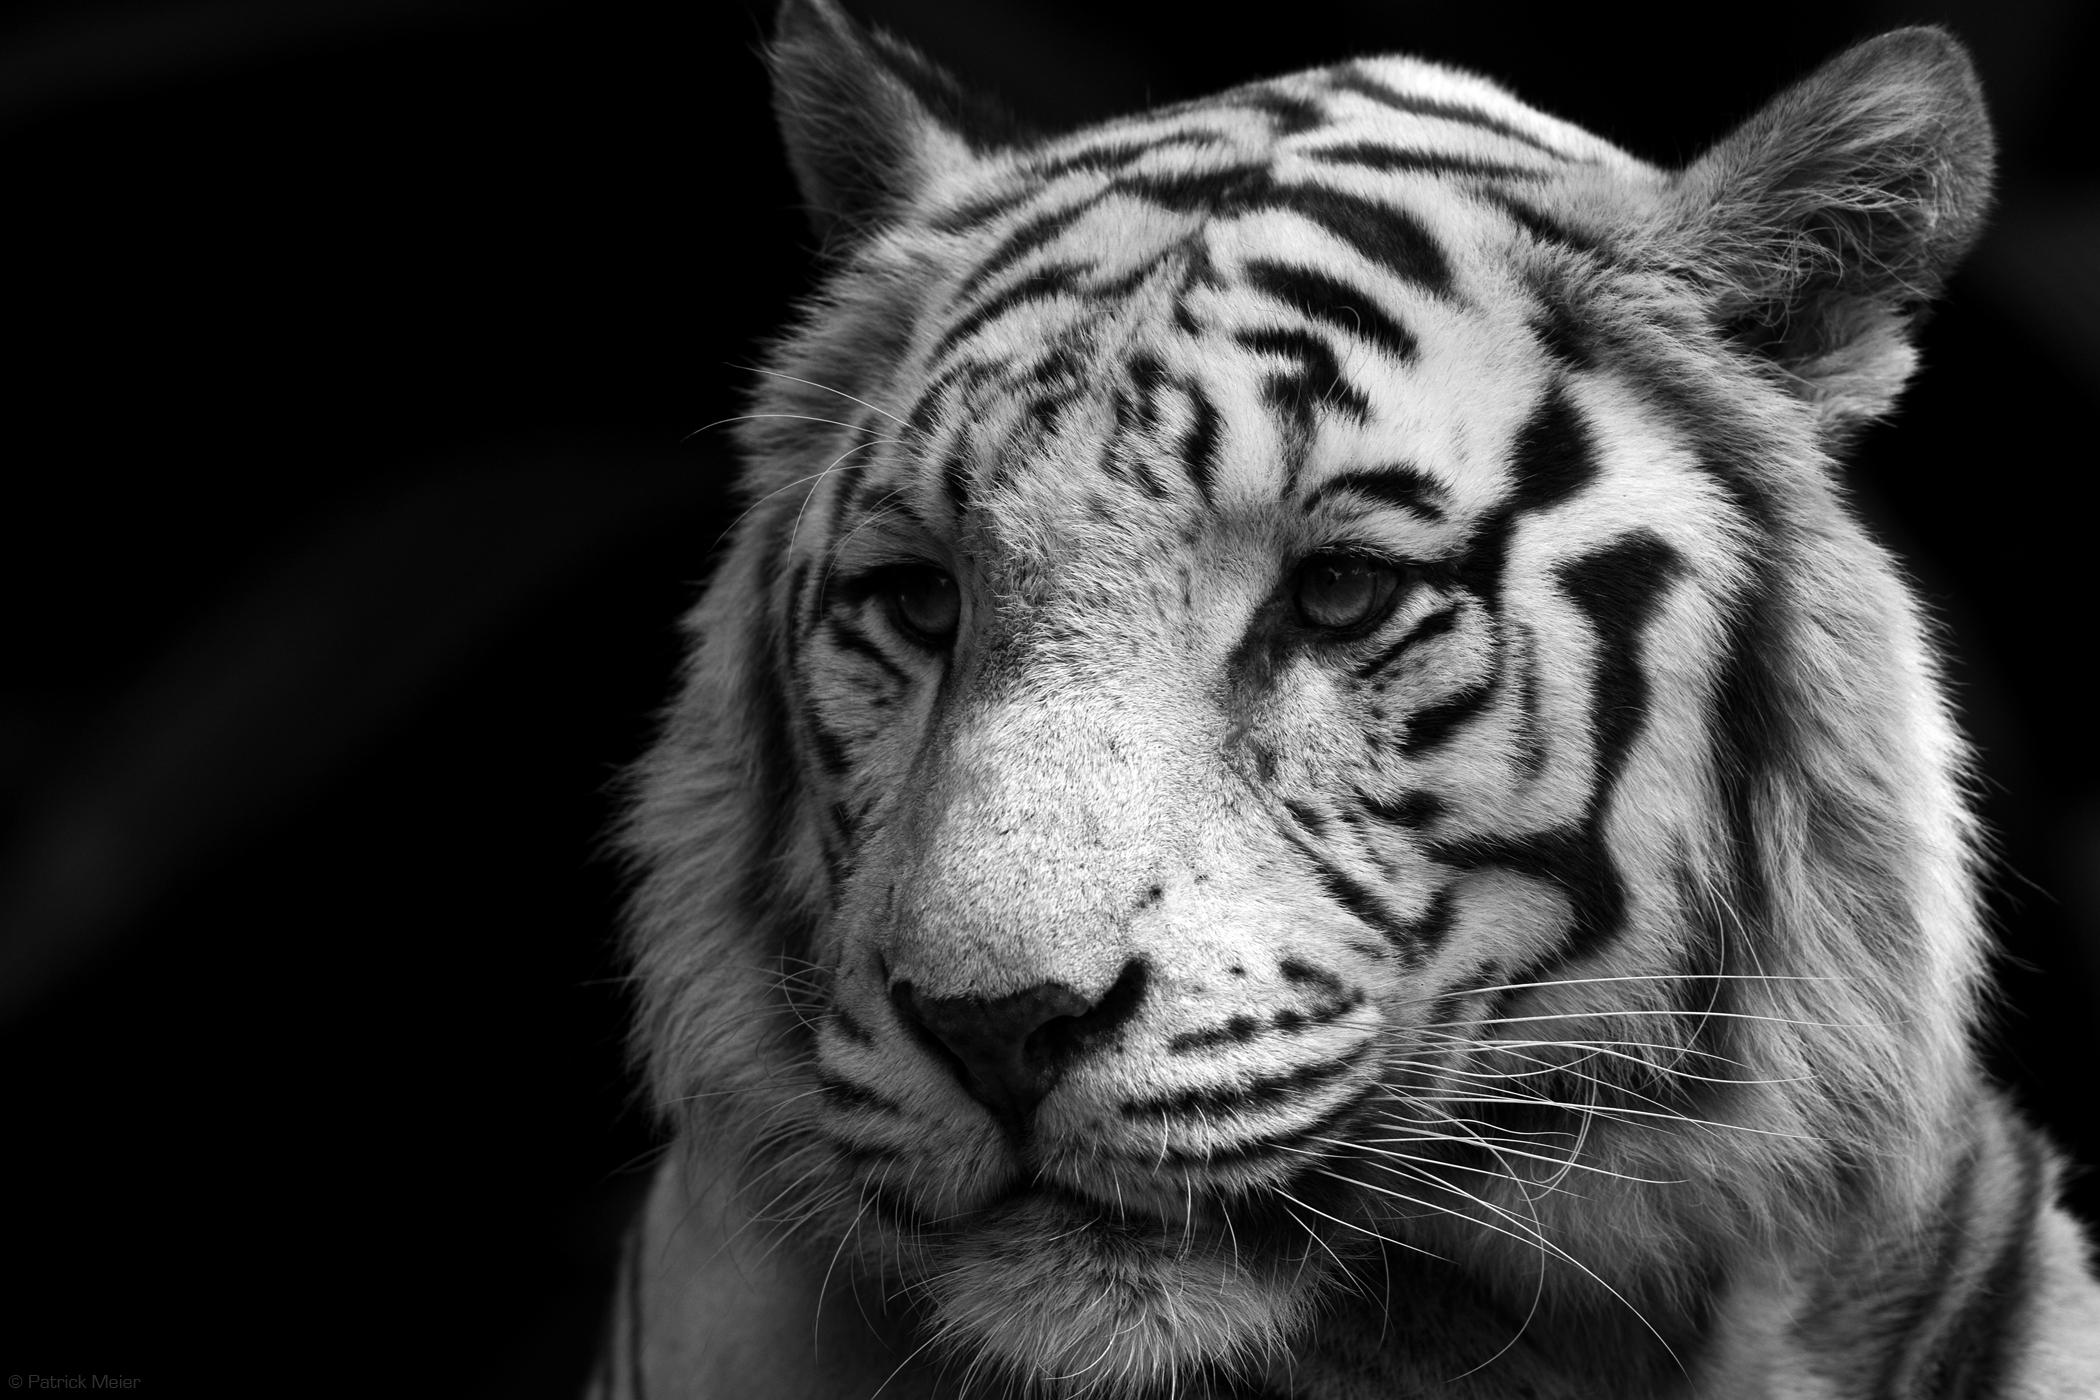 Great Tiger Portrait HD Wallpaper, get it now